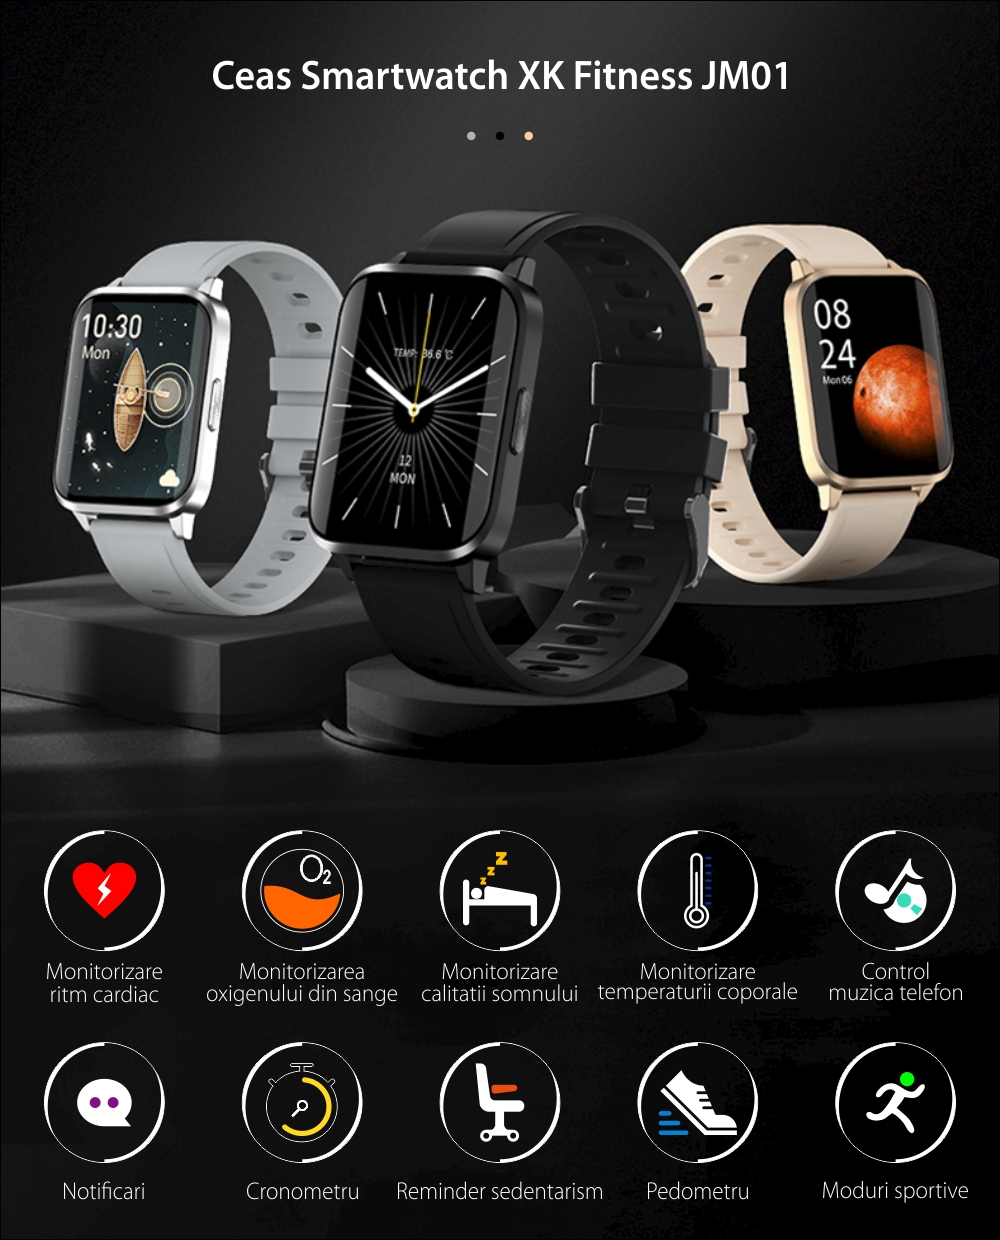 Ceas Smartwatch XK Fitness JM01 cu Functie masurare temperatura corporala, Monitorizare sanatate, Pedometru, Distanta, Calorii, Bratara silicon, Negru